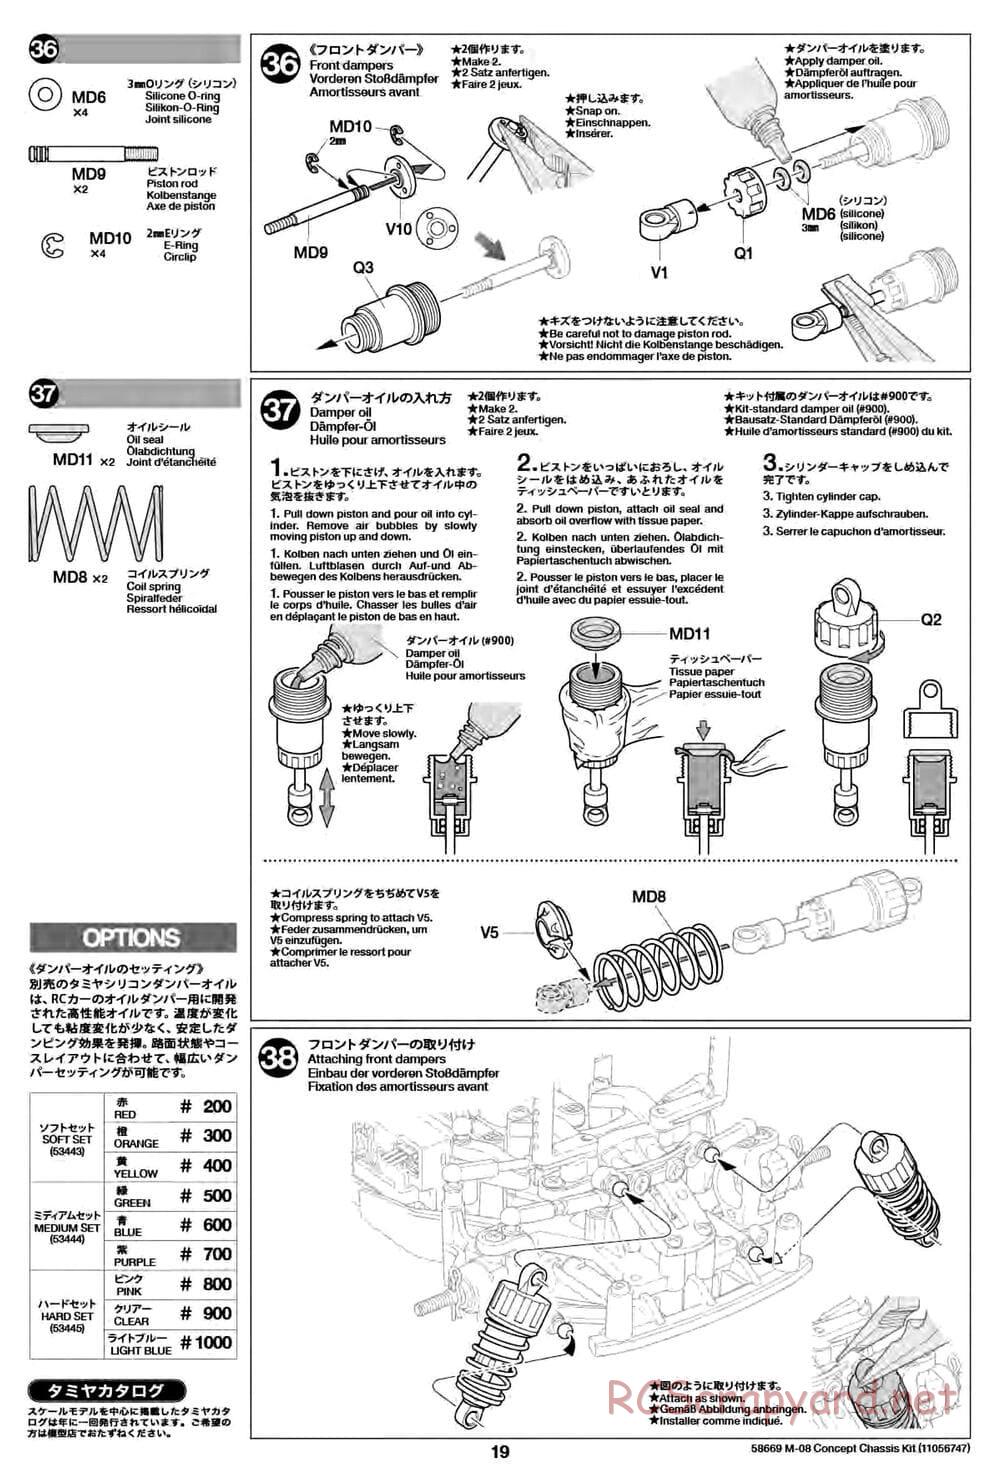 Tamiya - M-08 Concept Chassis - Manual - Page 19